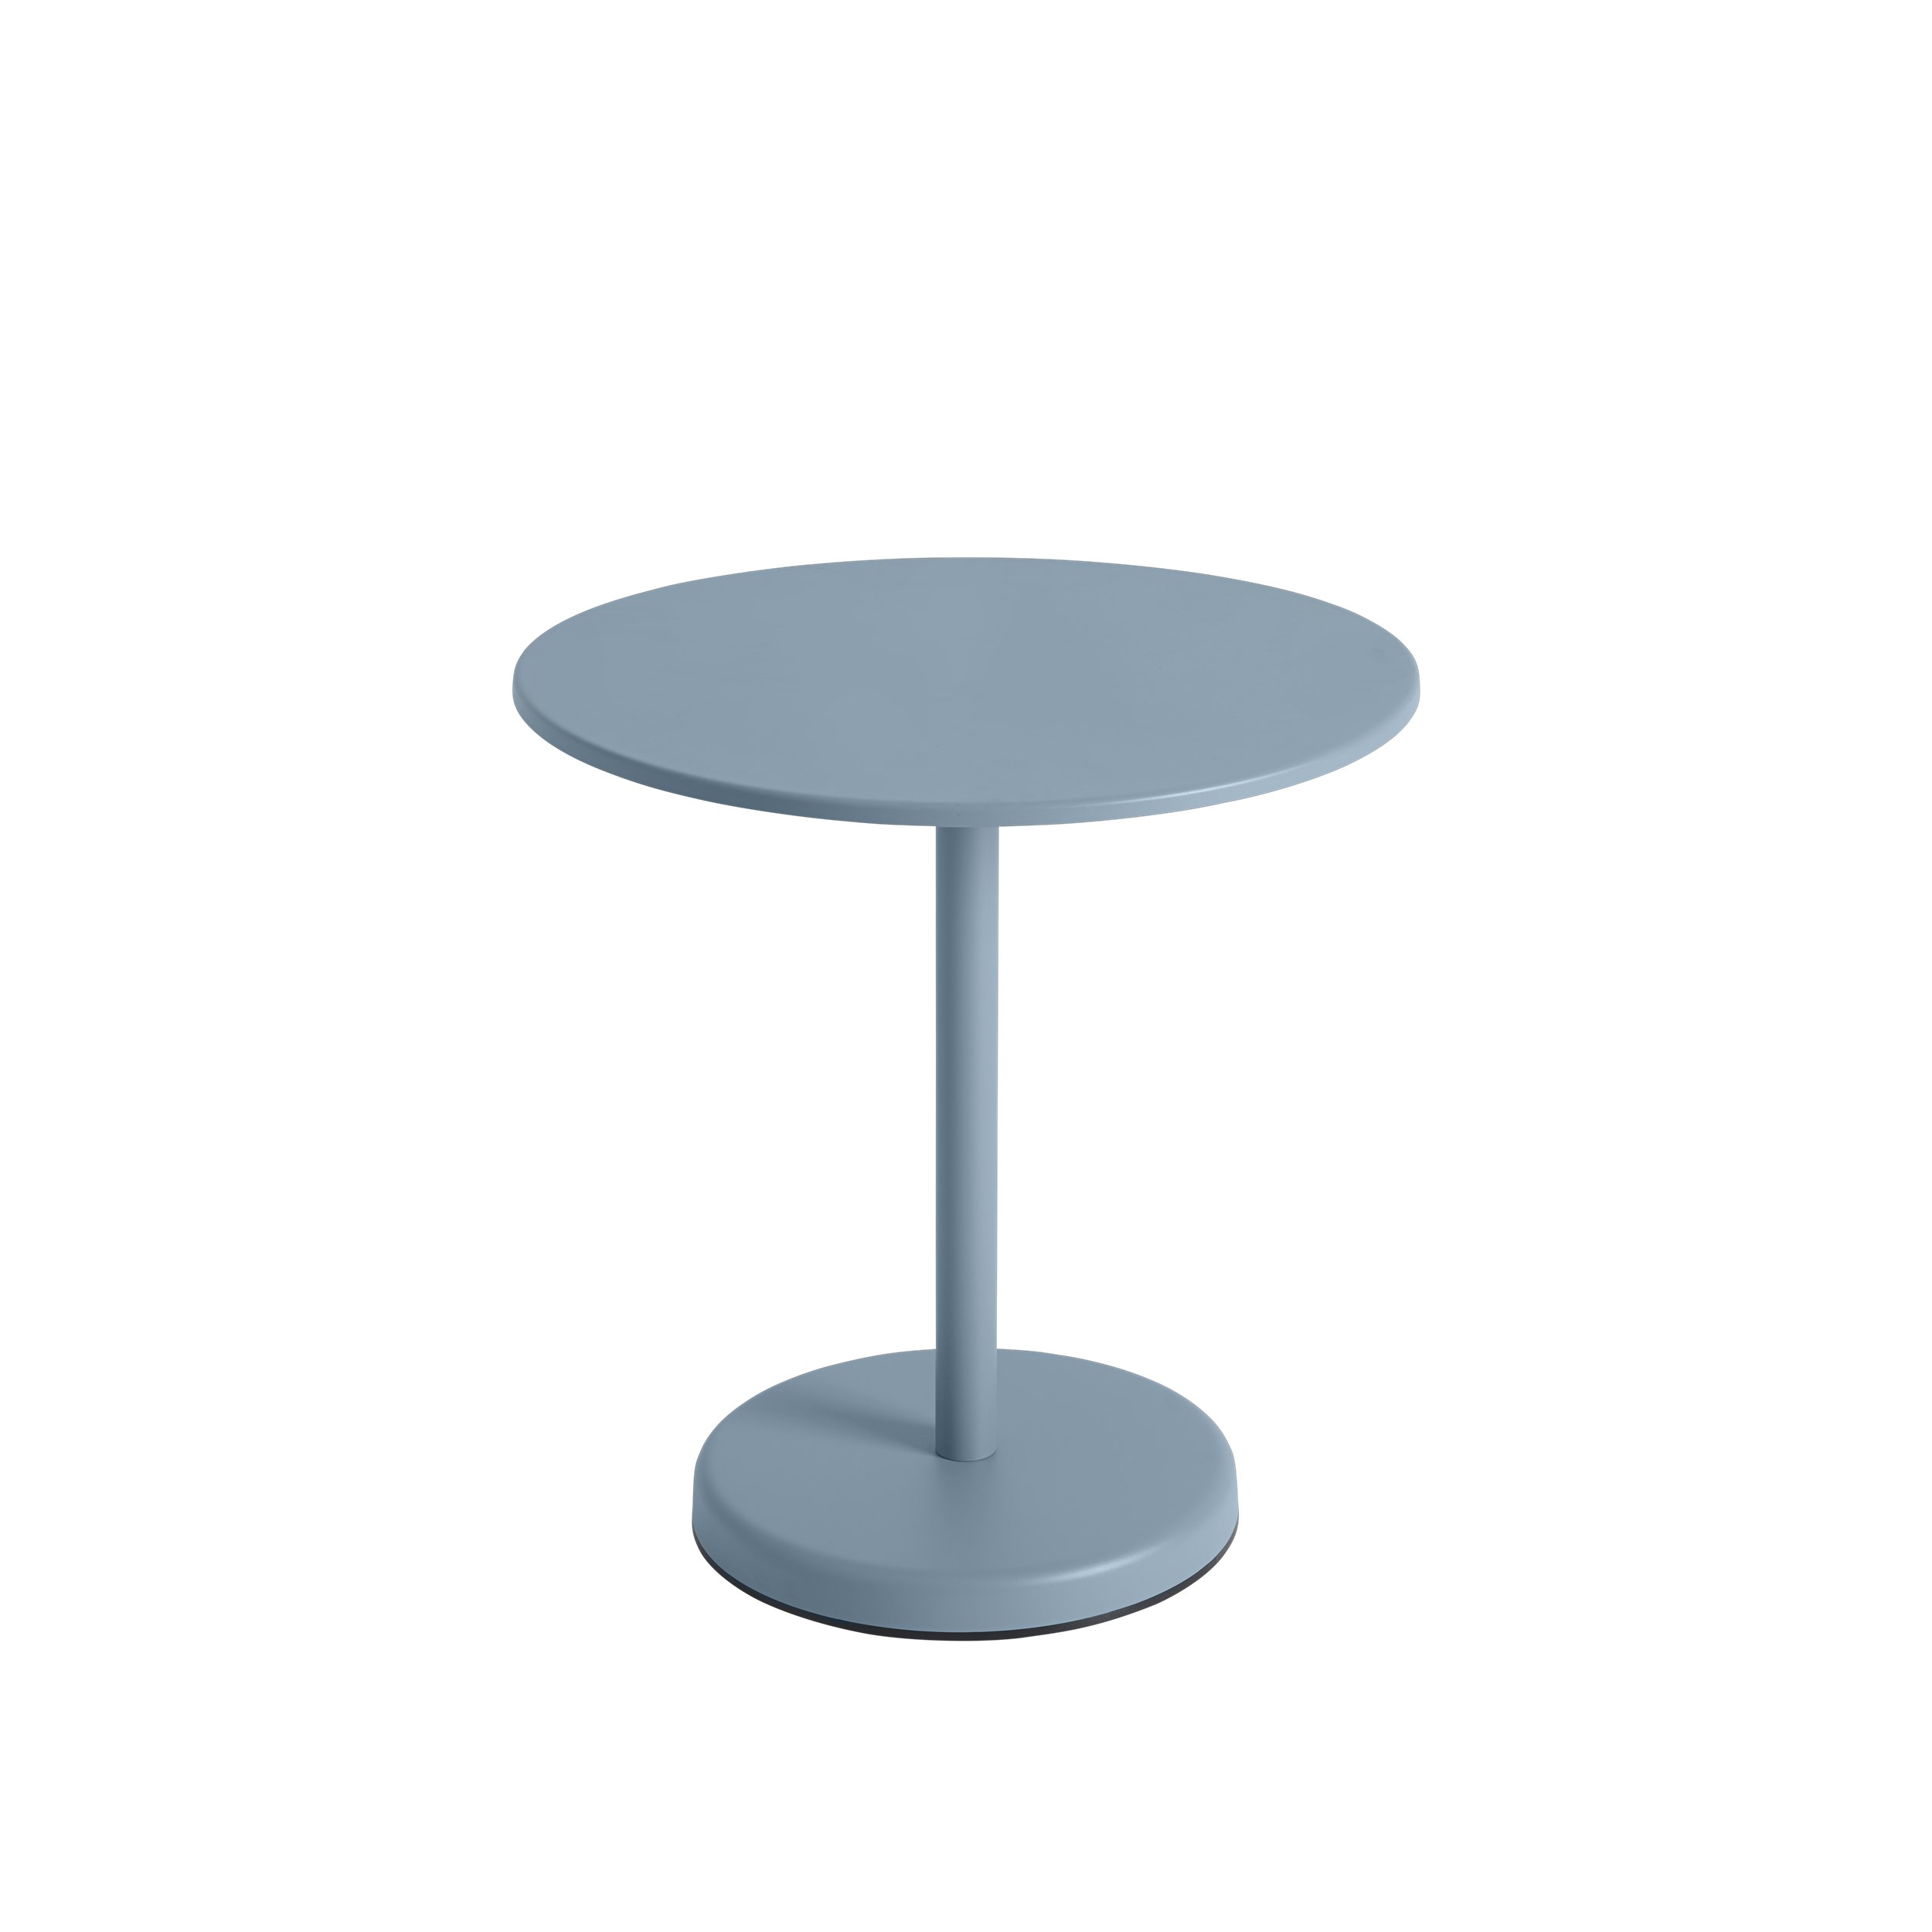 Linear Steel Cafe Table 70cm Diameter.